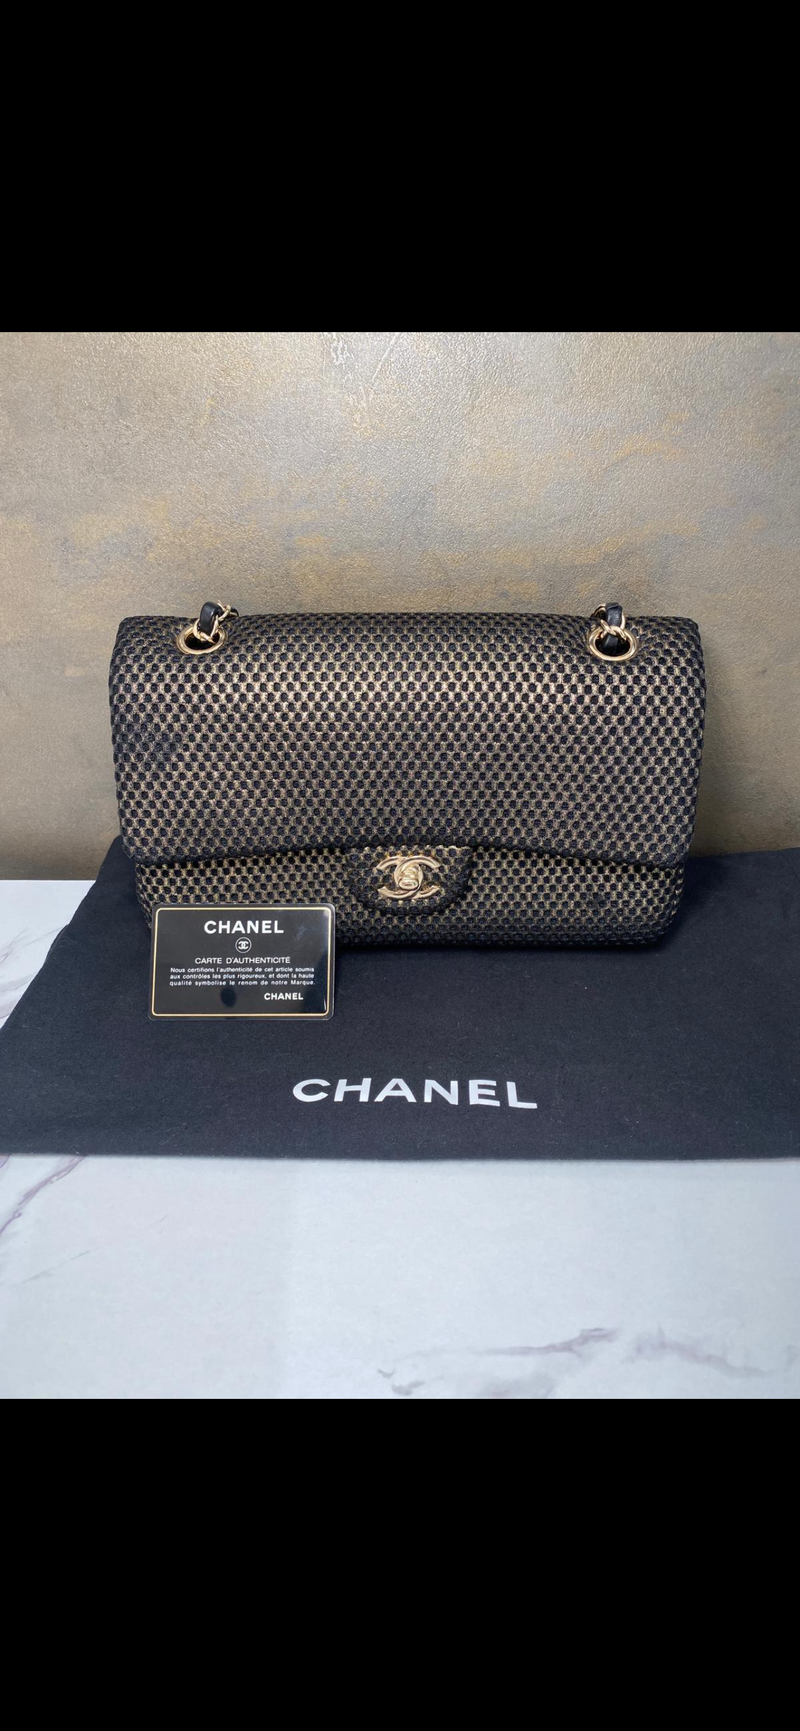 Chanel Black and Gold Medium flap bag